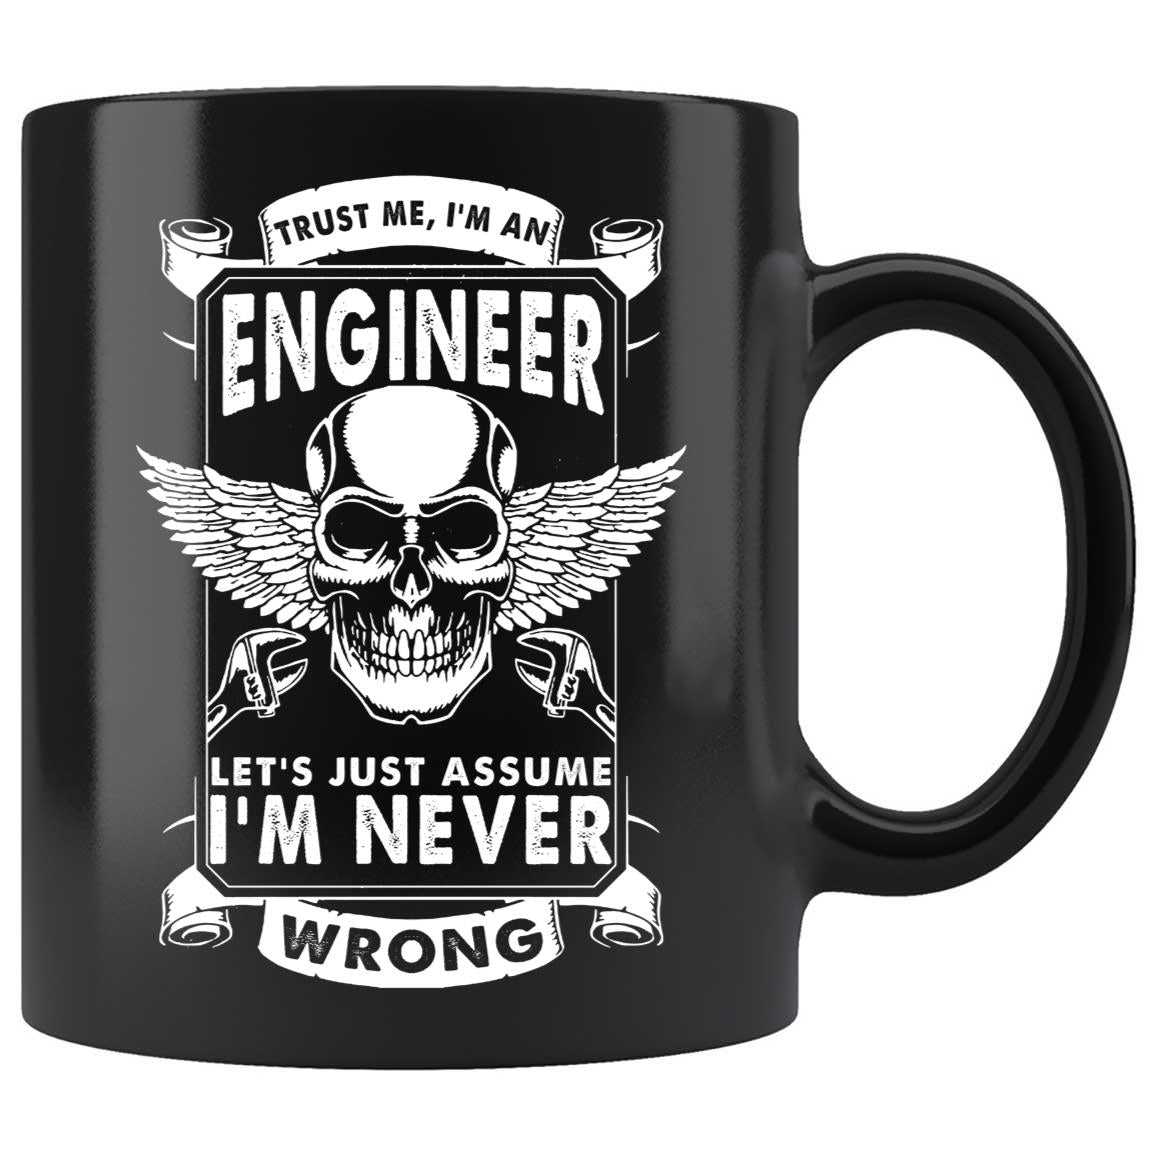 Skitongifts Coffee Mug Funny Ceramic Novelty NH06012022 - Trust Me, I'm An Engineer Neozvoz